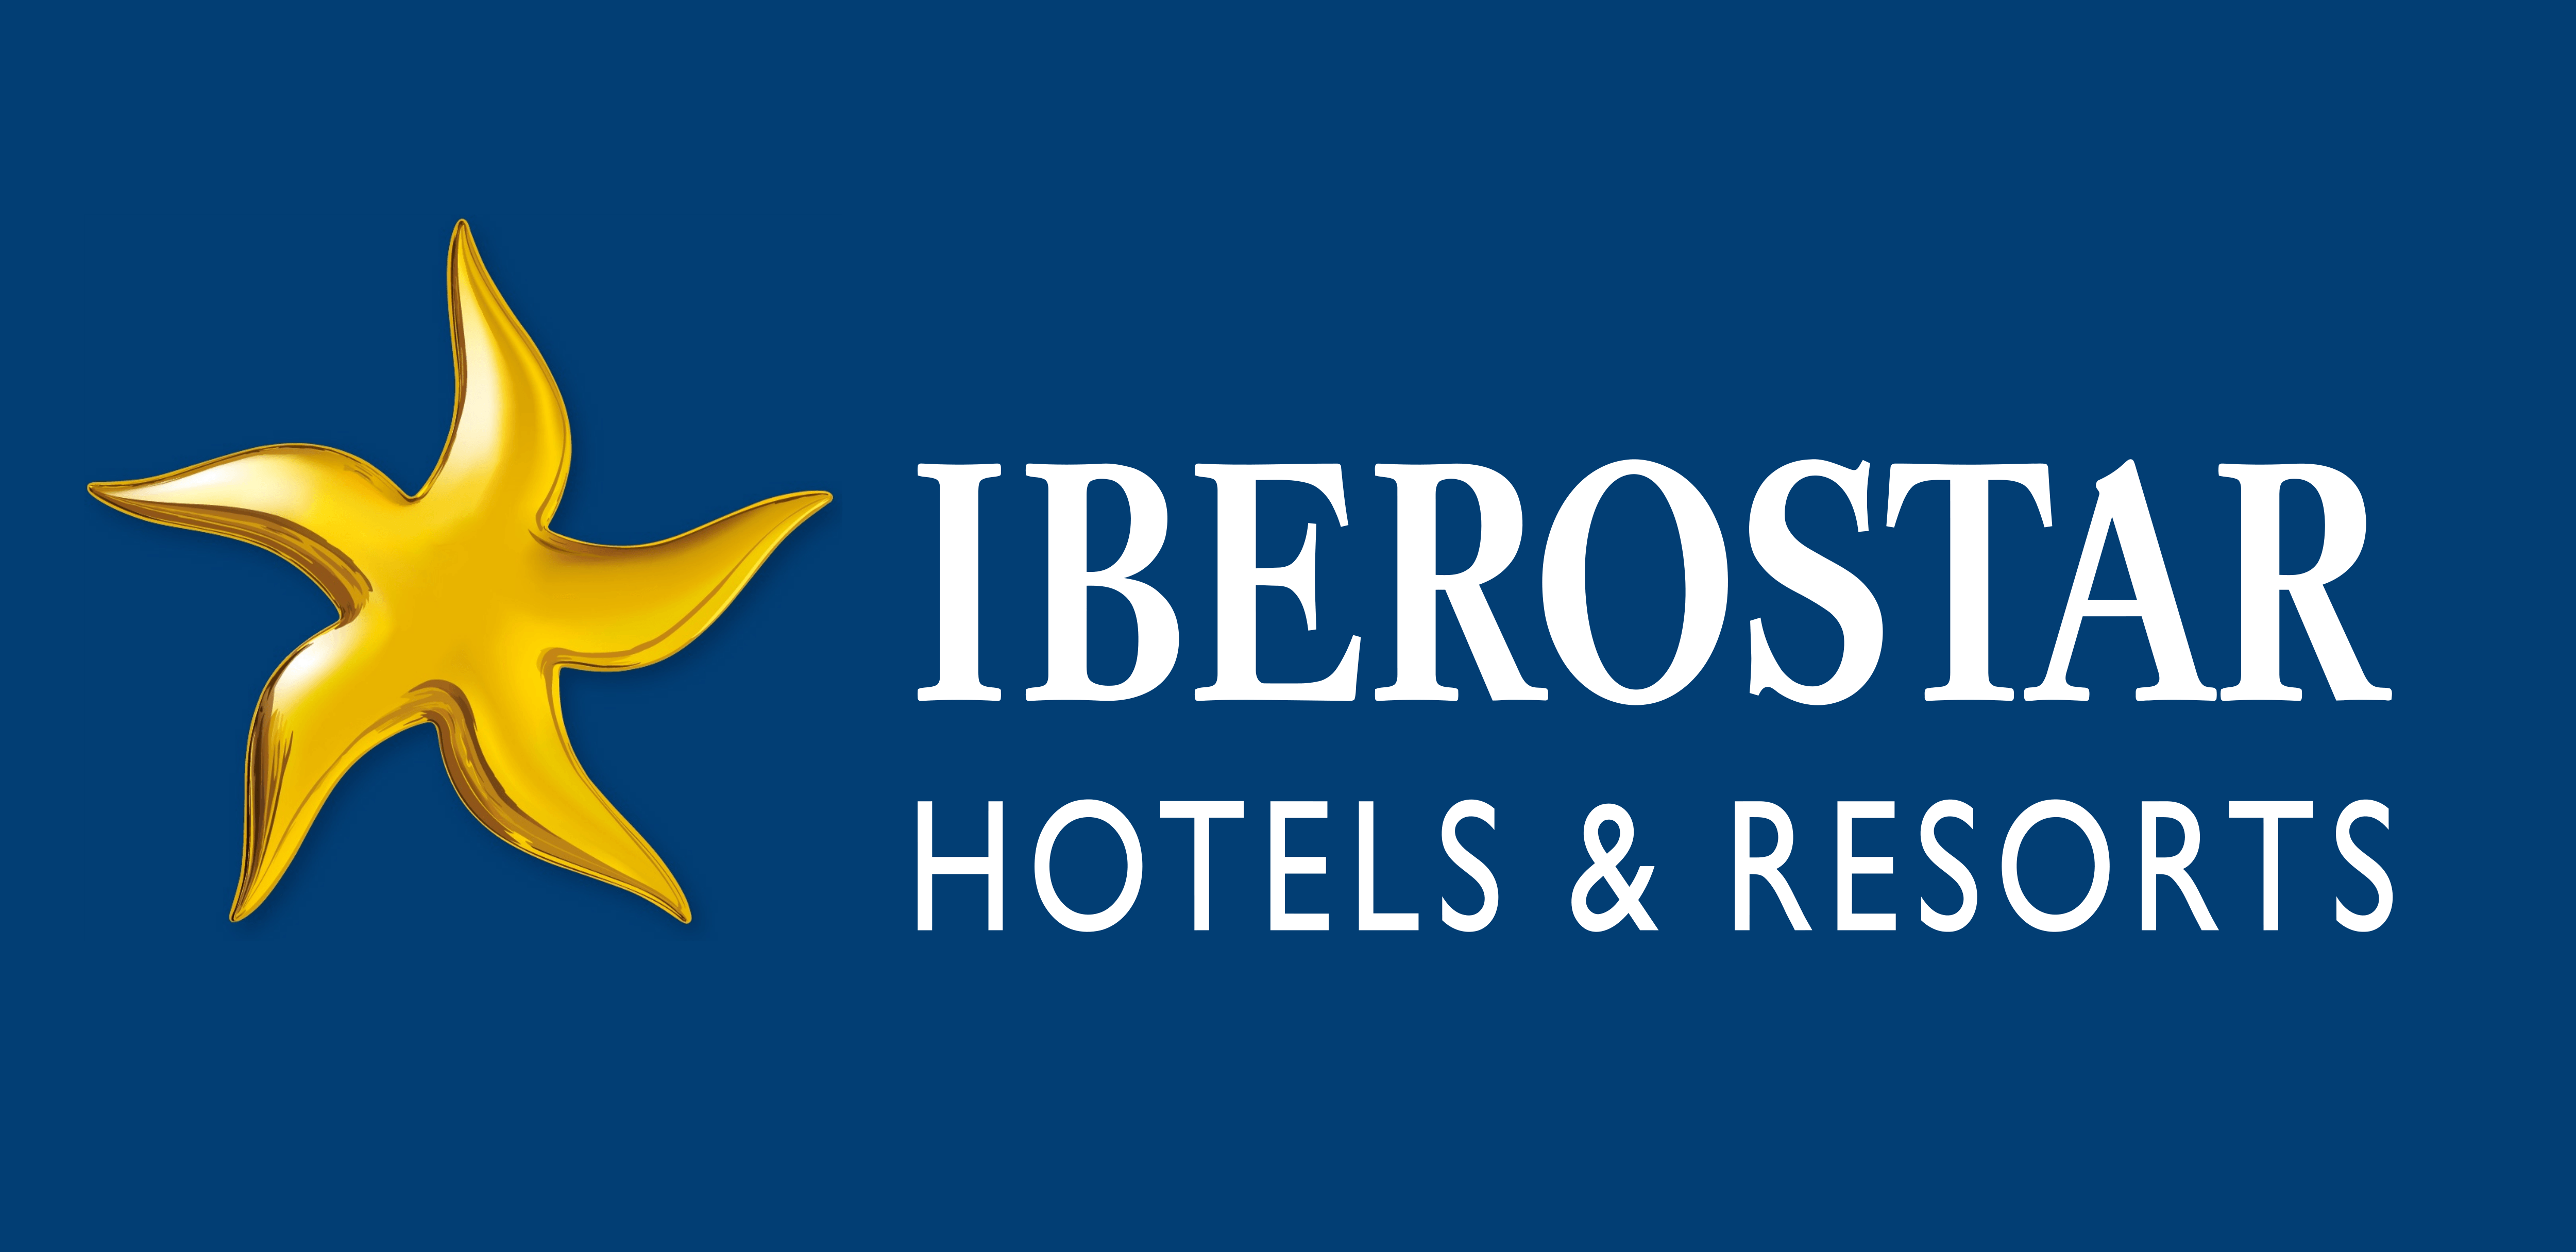 Iberostar Logo - Iberostar Hotels & Resorts – Logos Download